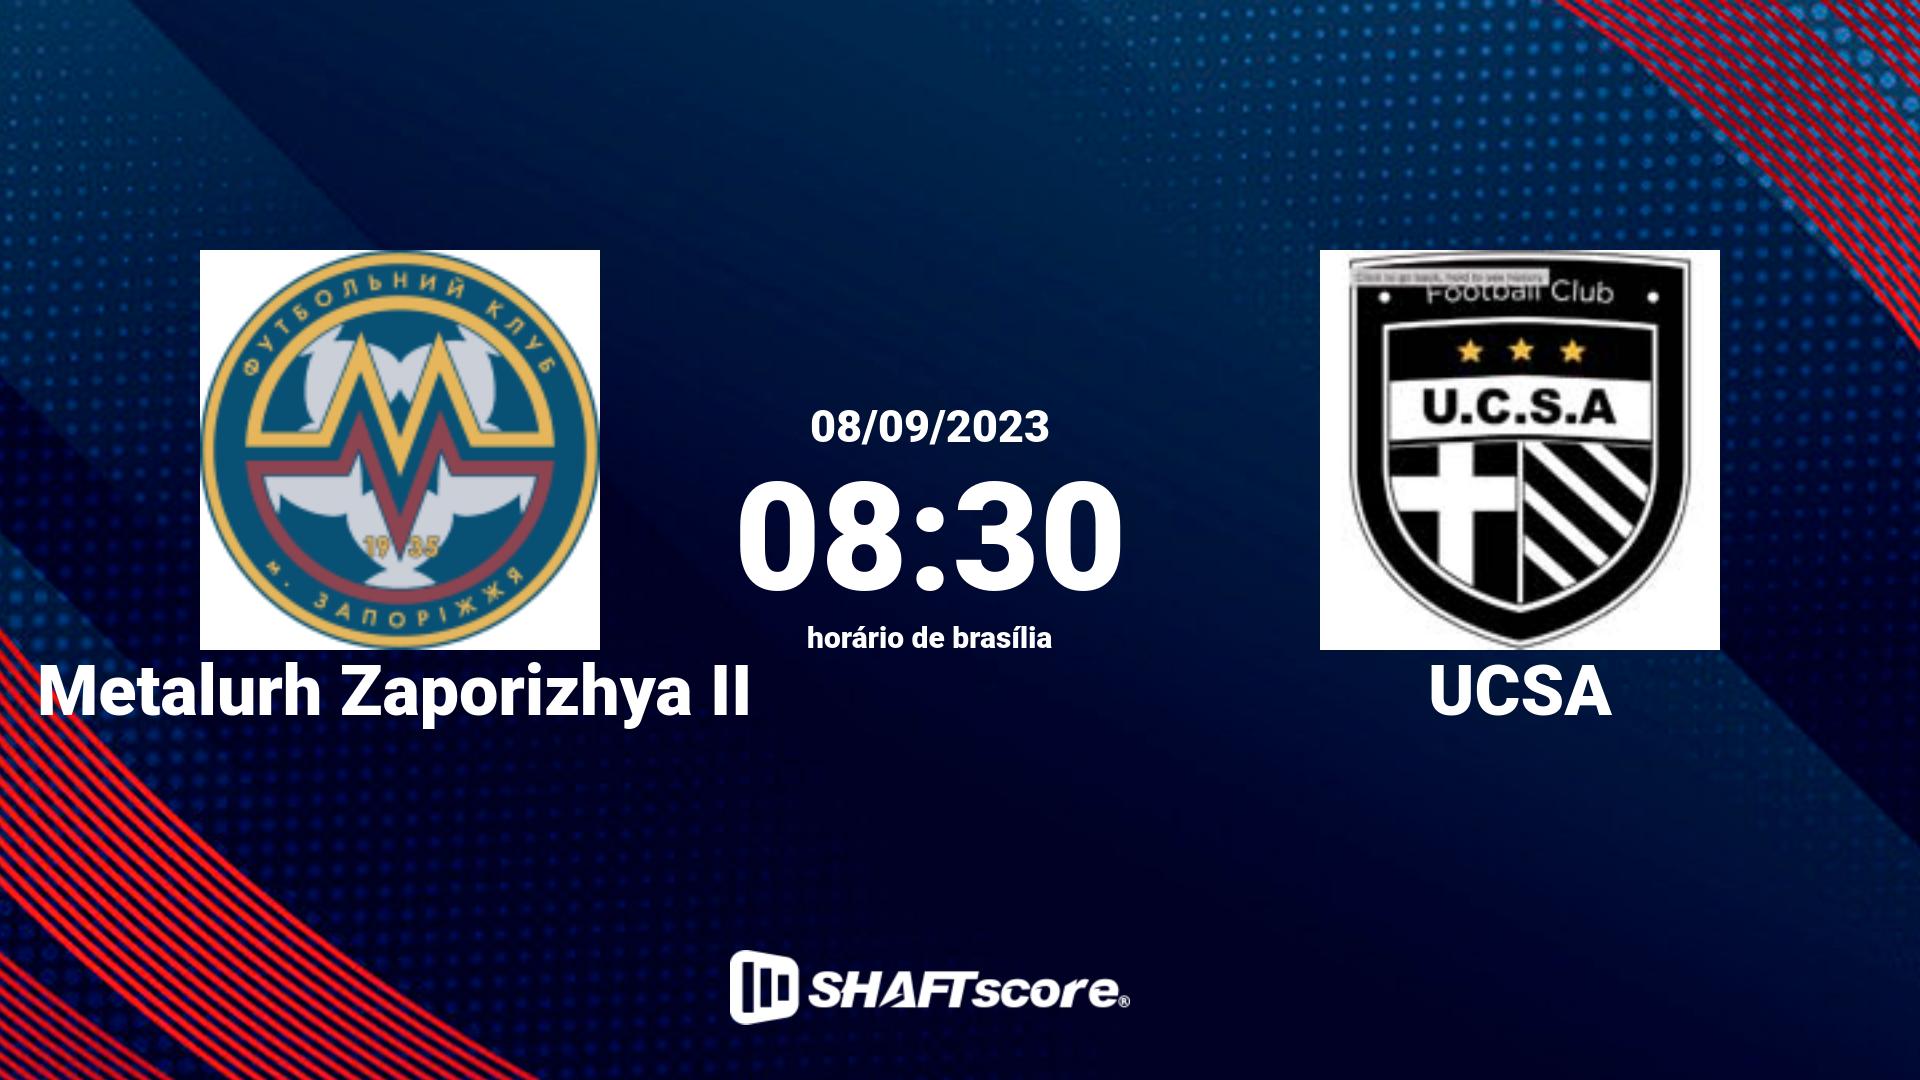 Estatísticas do jogo Metalurh Zaporizhya II vs UCSA 08.09 08:30